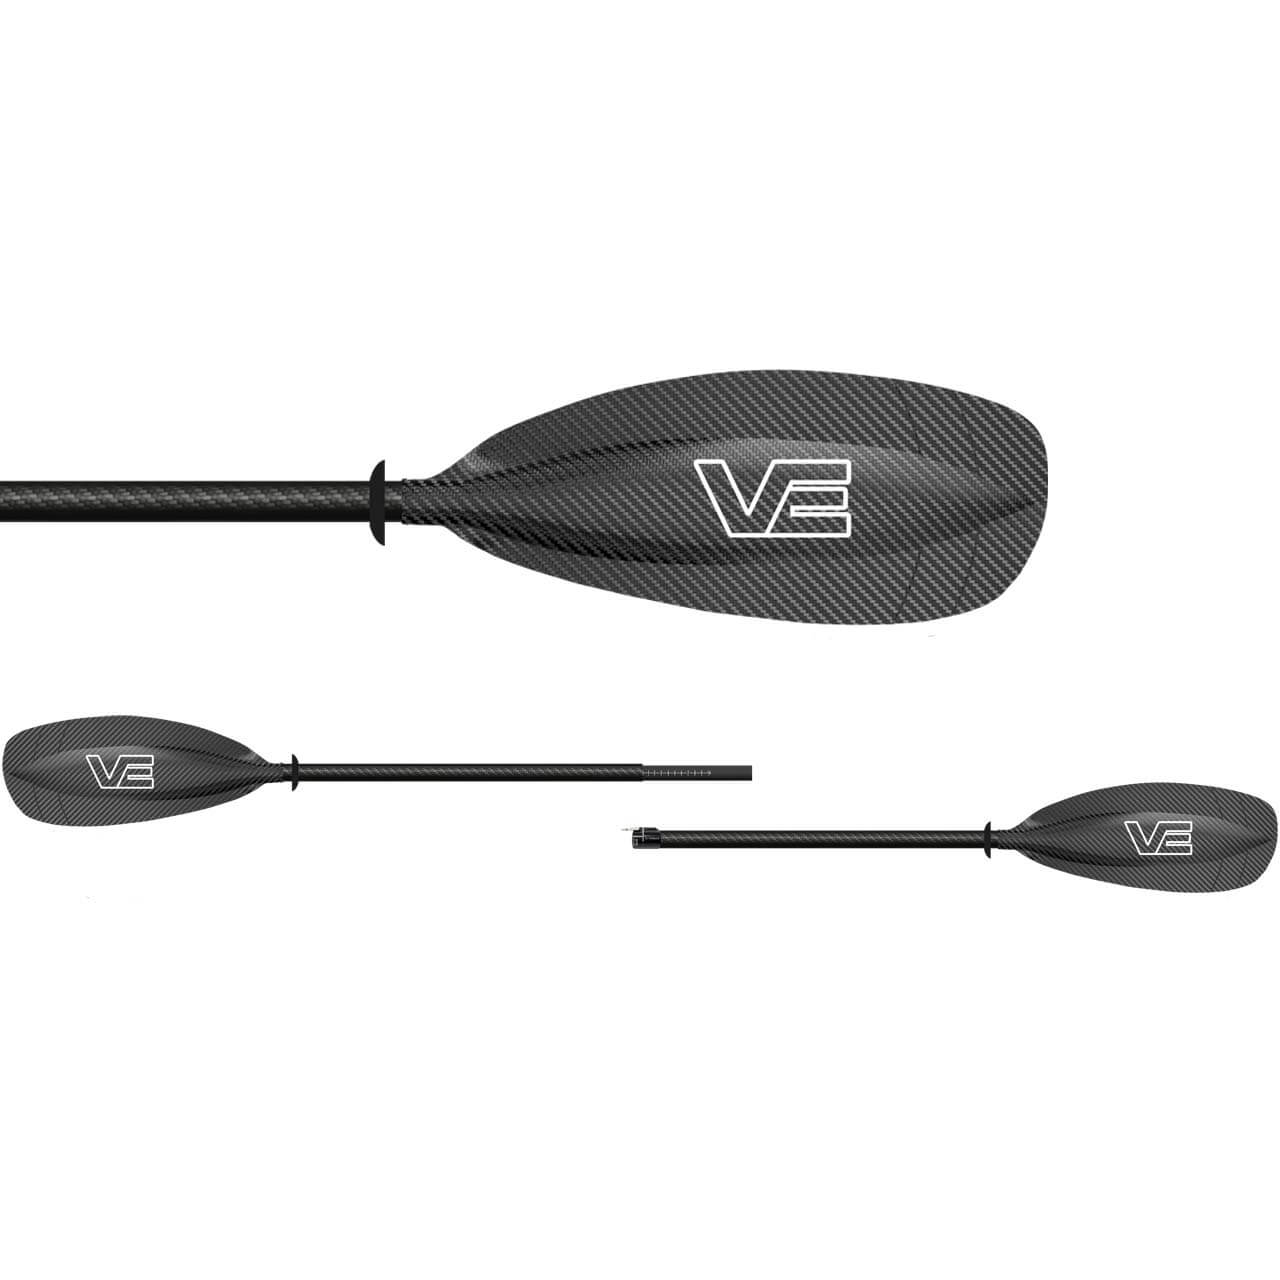 VE Carbonpaddel EXP - 210-220, Straight (2pc) von VE Paddles}